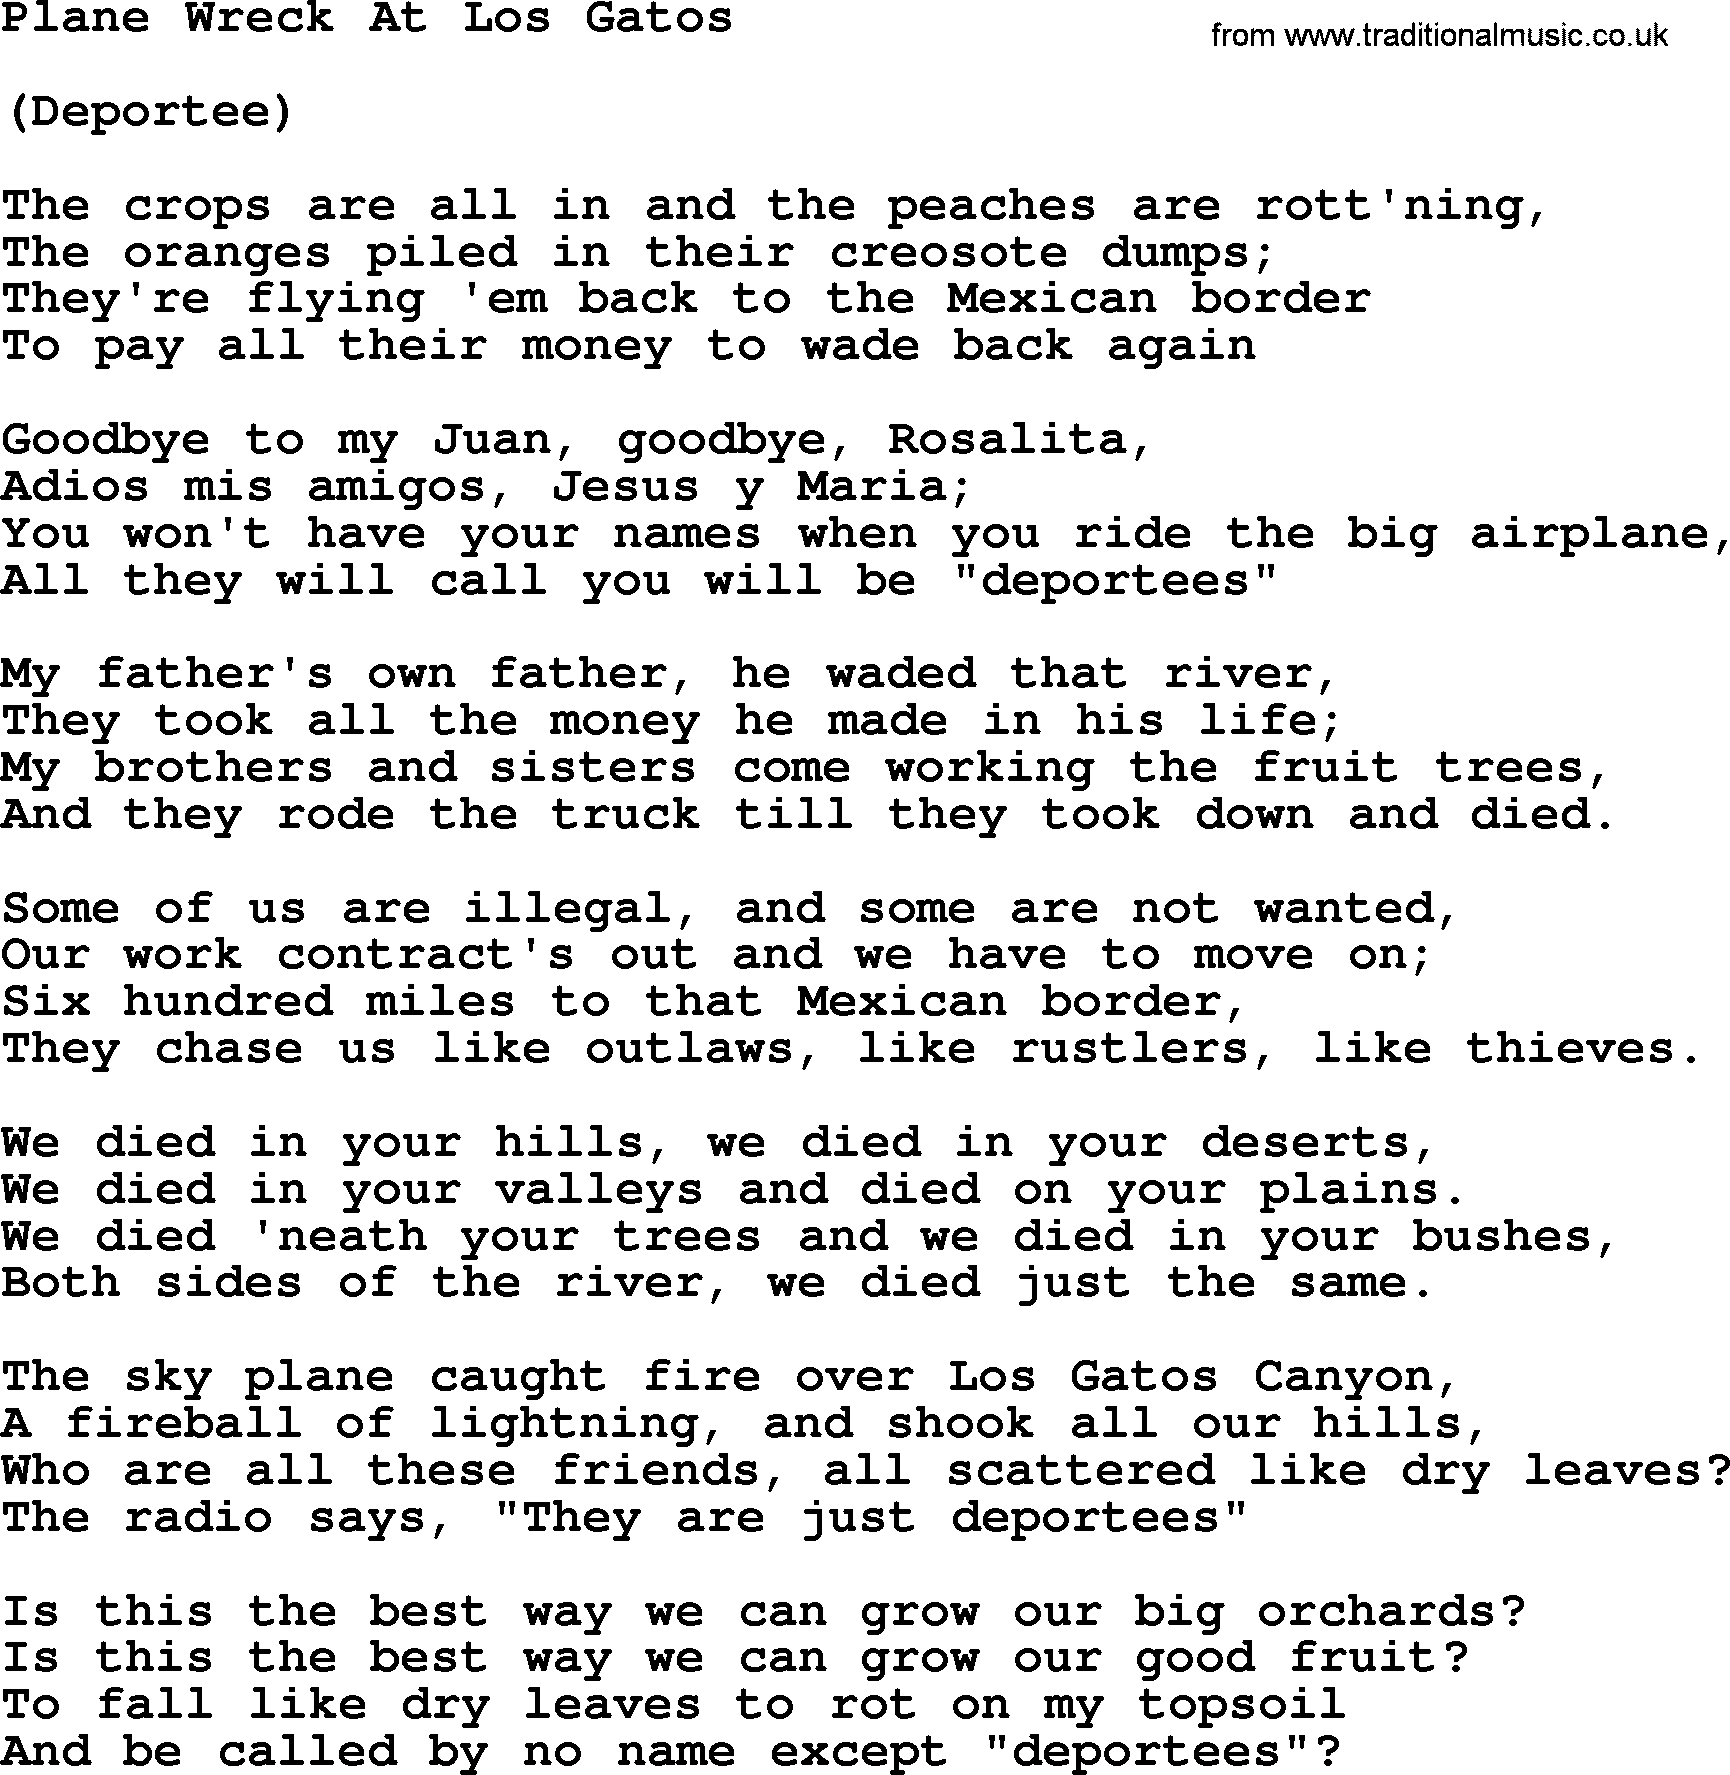 Woody Guthrie song Plane Wreck At Los Gatos lyrics